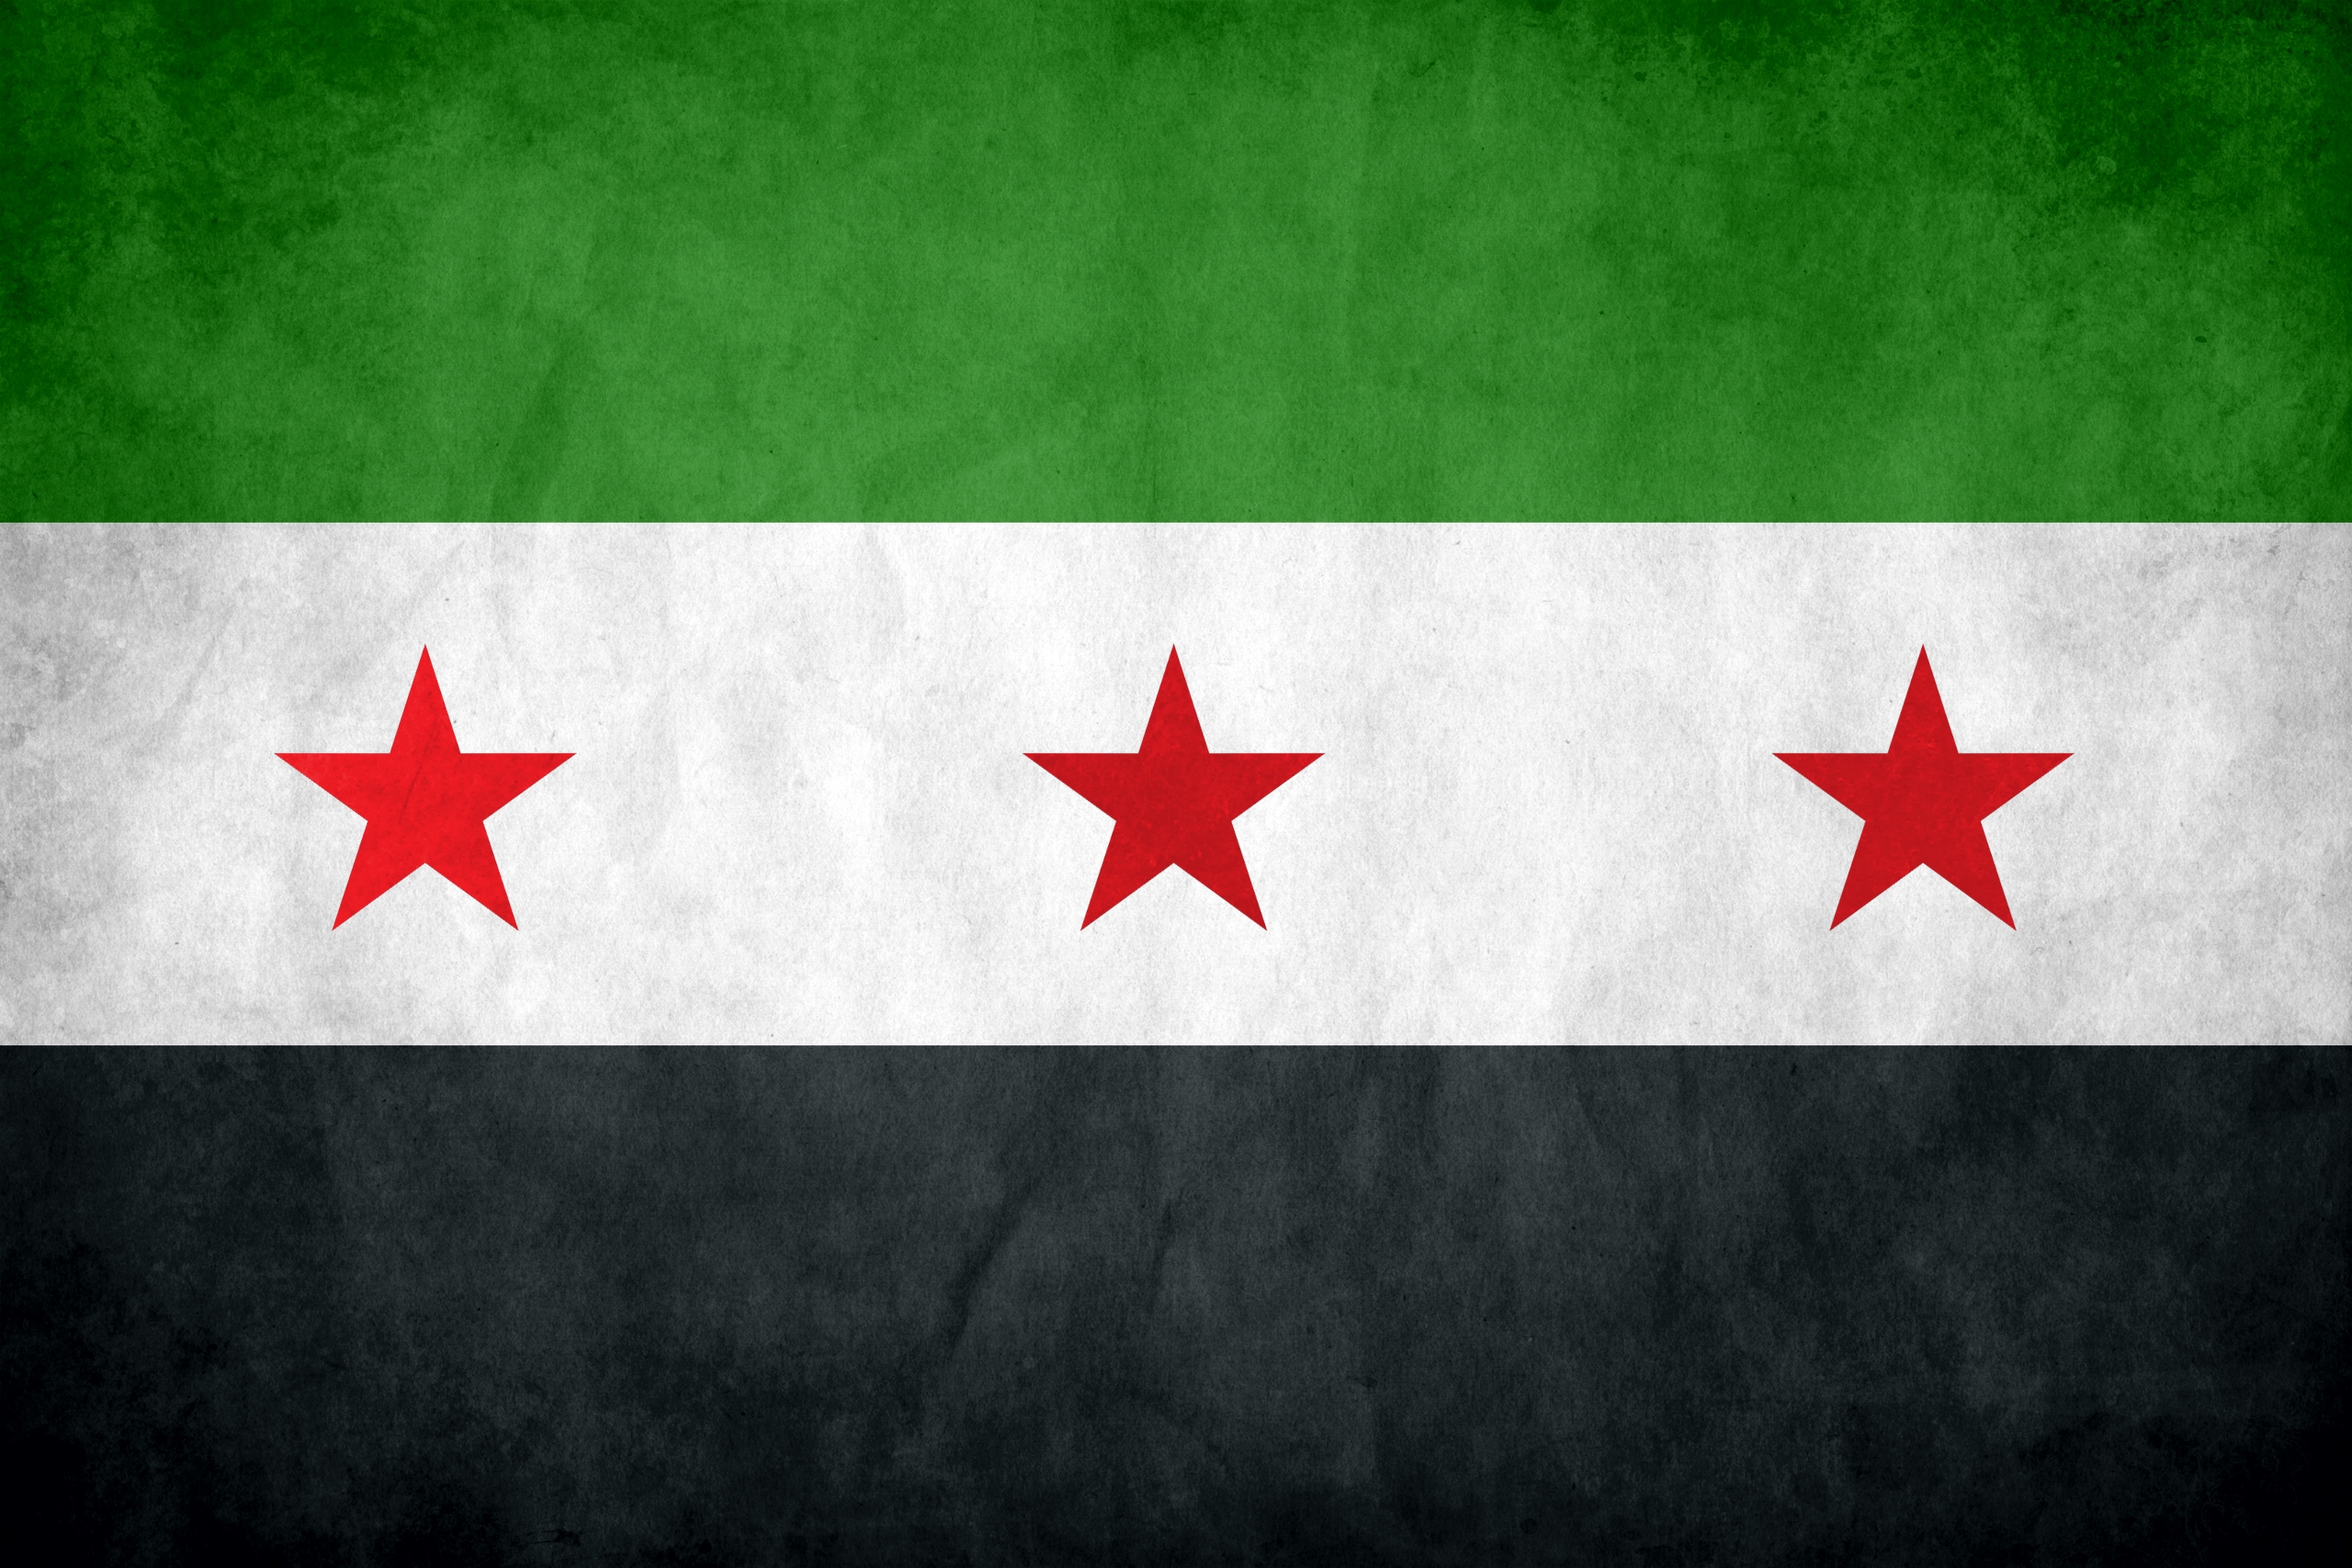 Syria Grunge Flag by think0 on DeviantArt